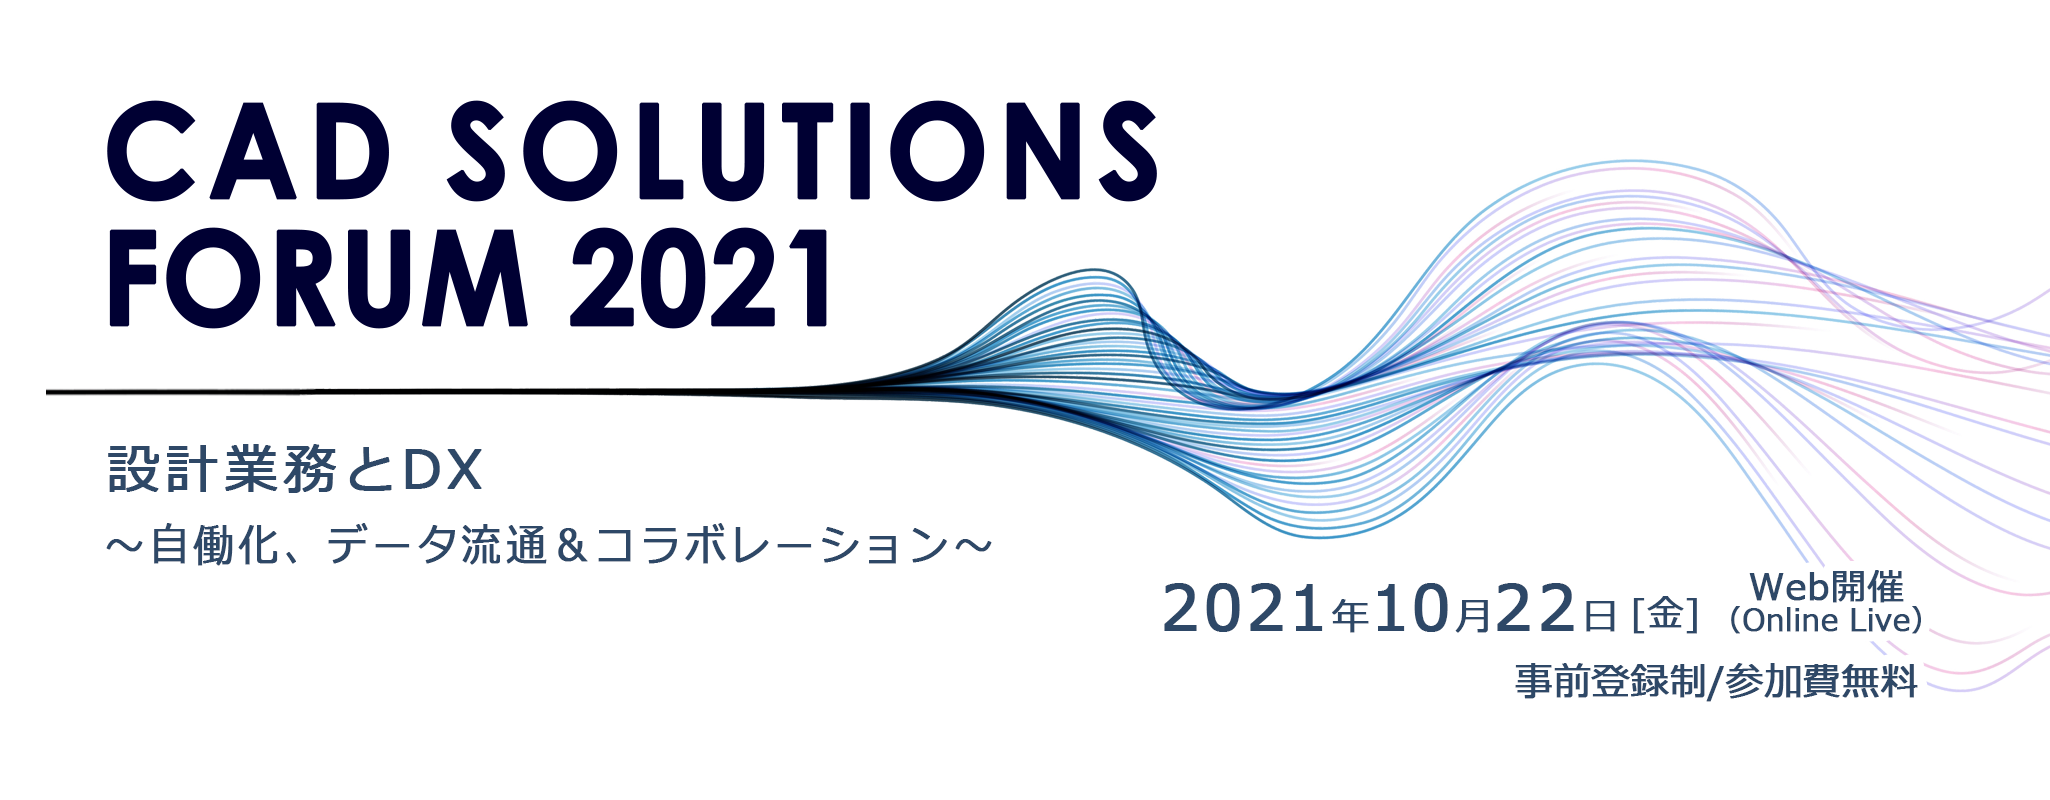 CAD SOLUTIONS FORUM 2021